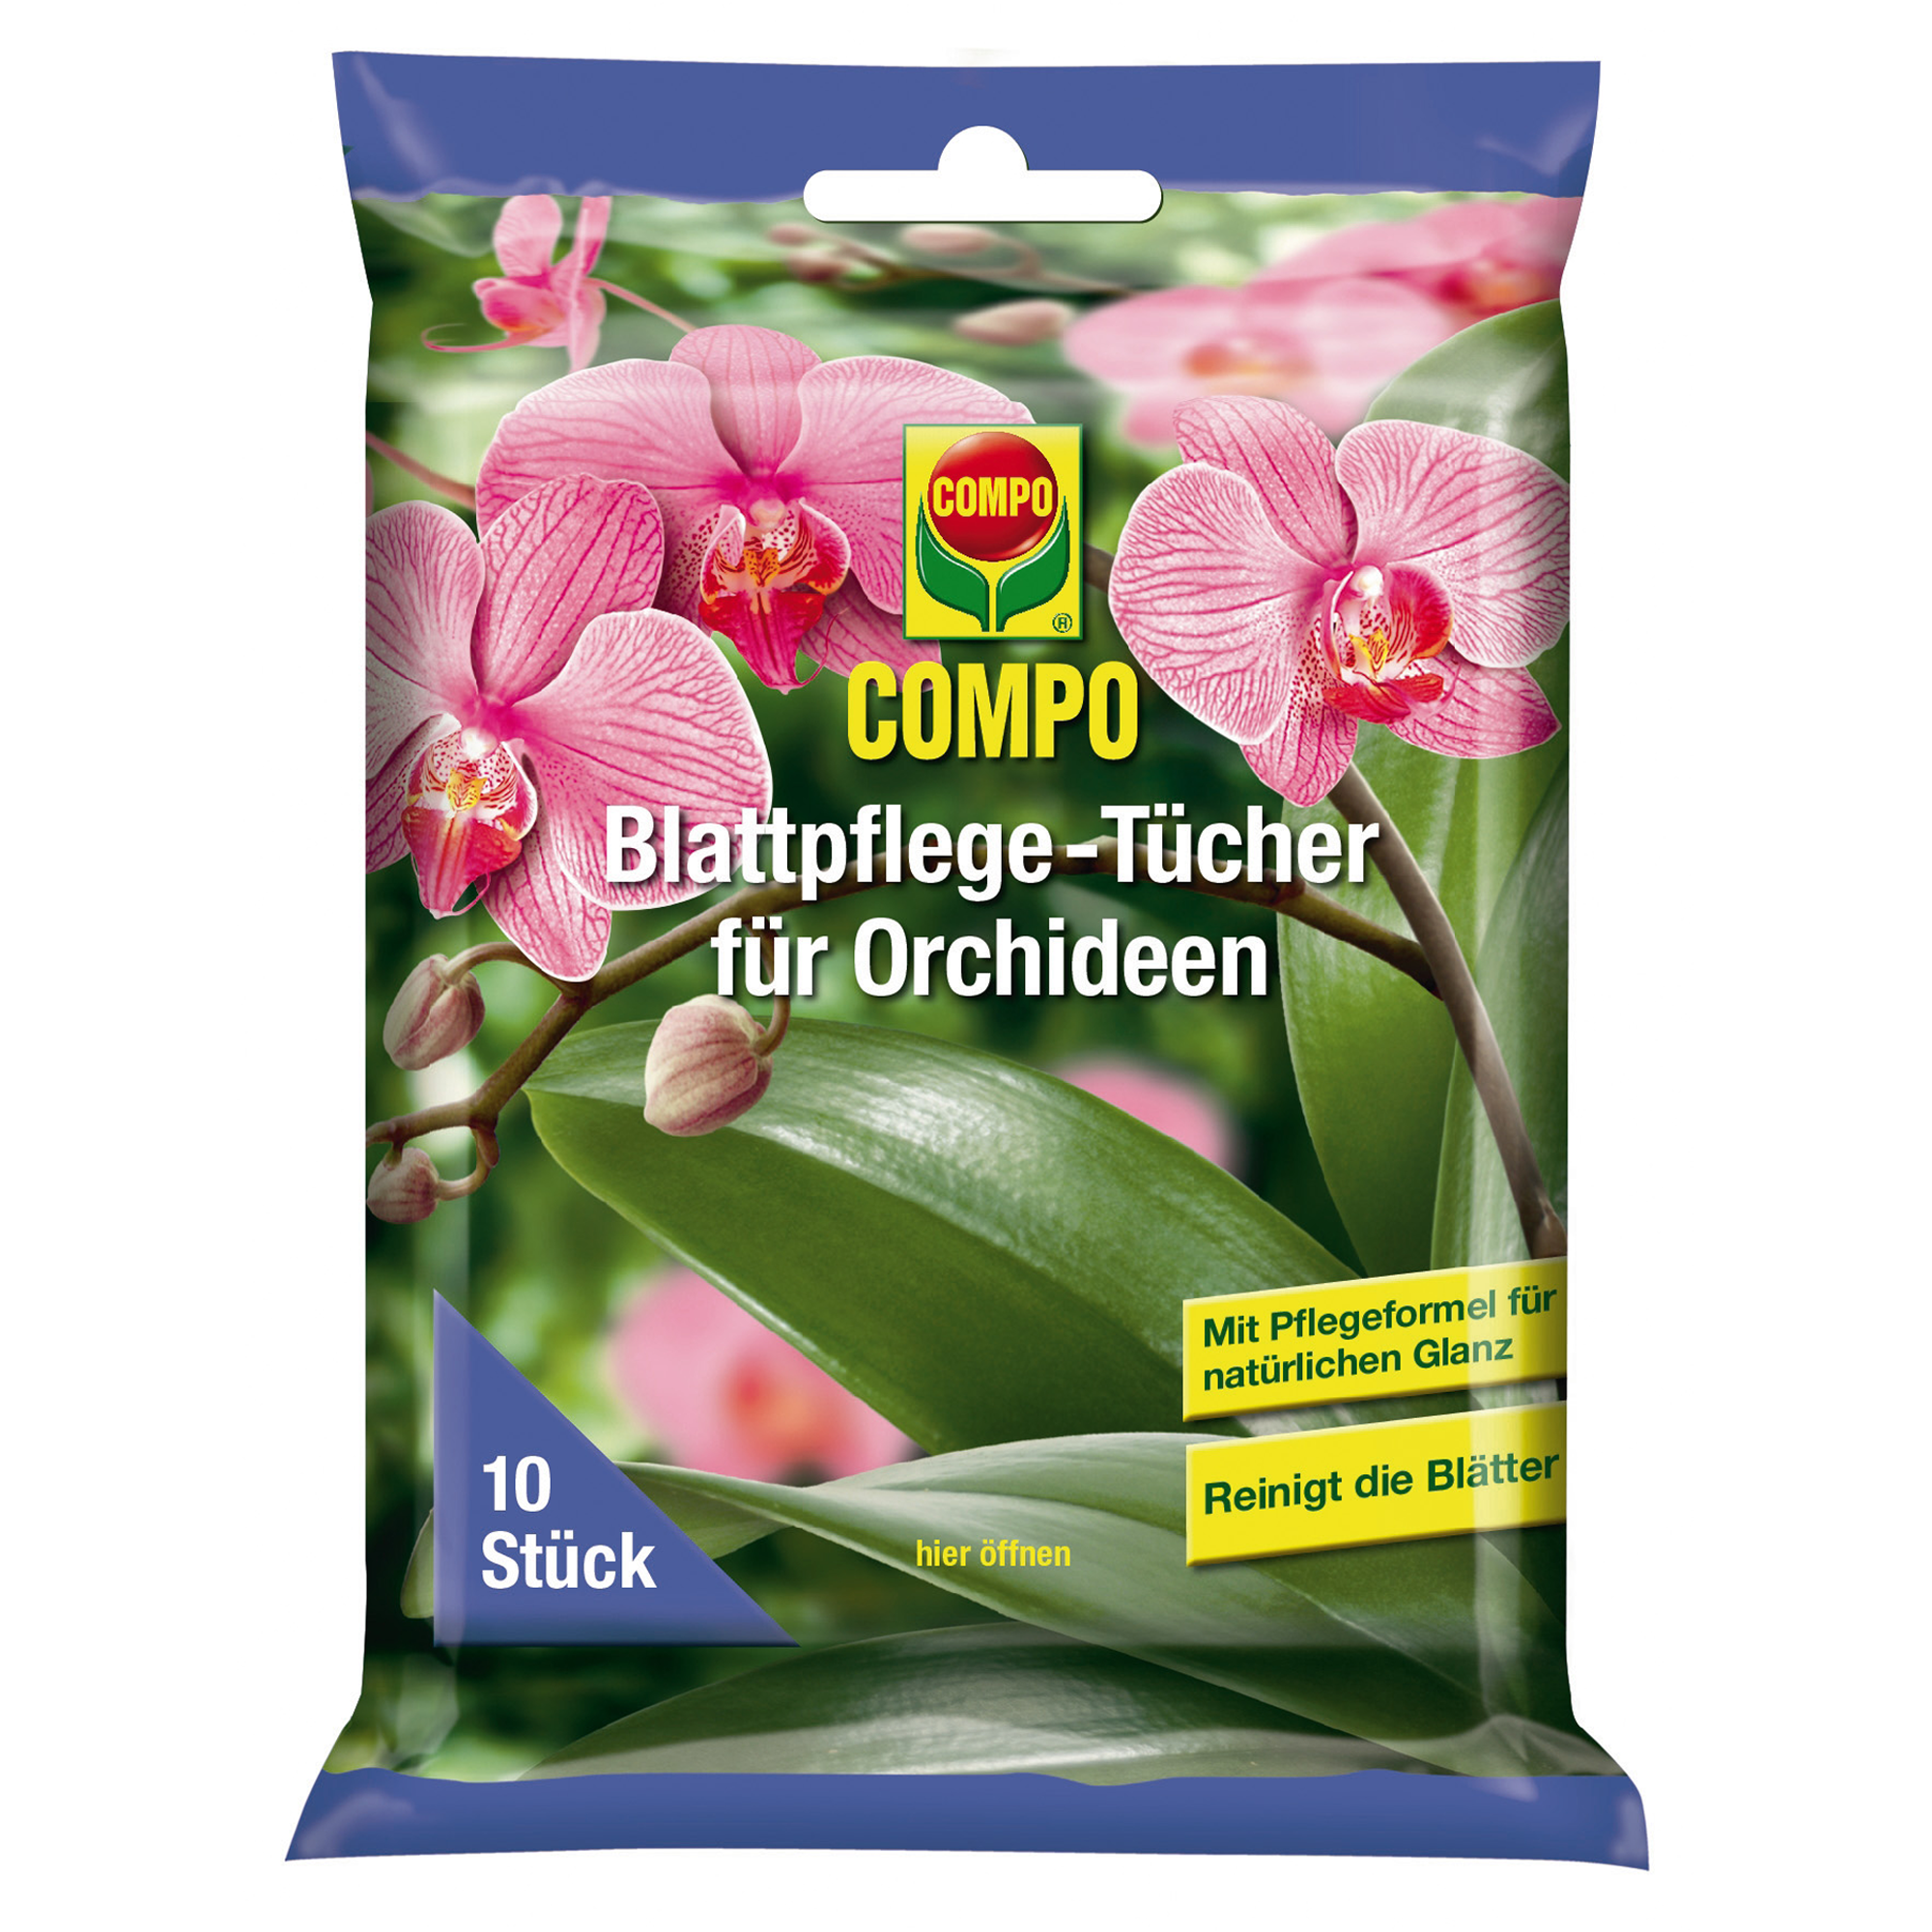 Blattpflegetücher für Orchideen 10 Stück + product picture